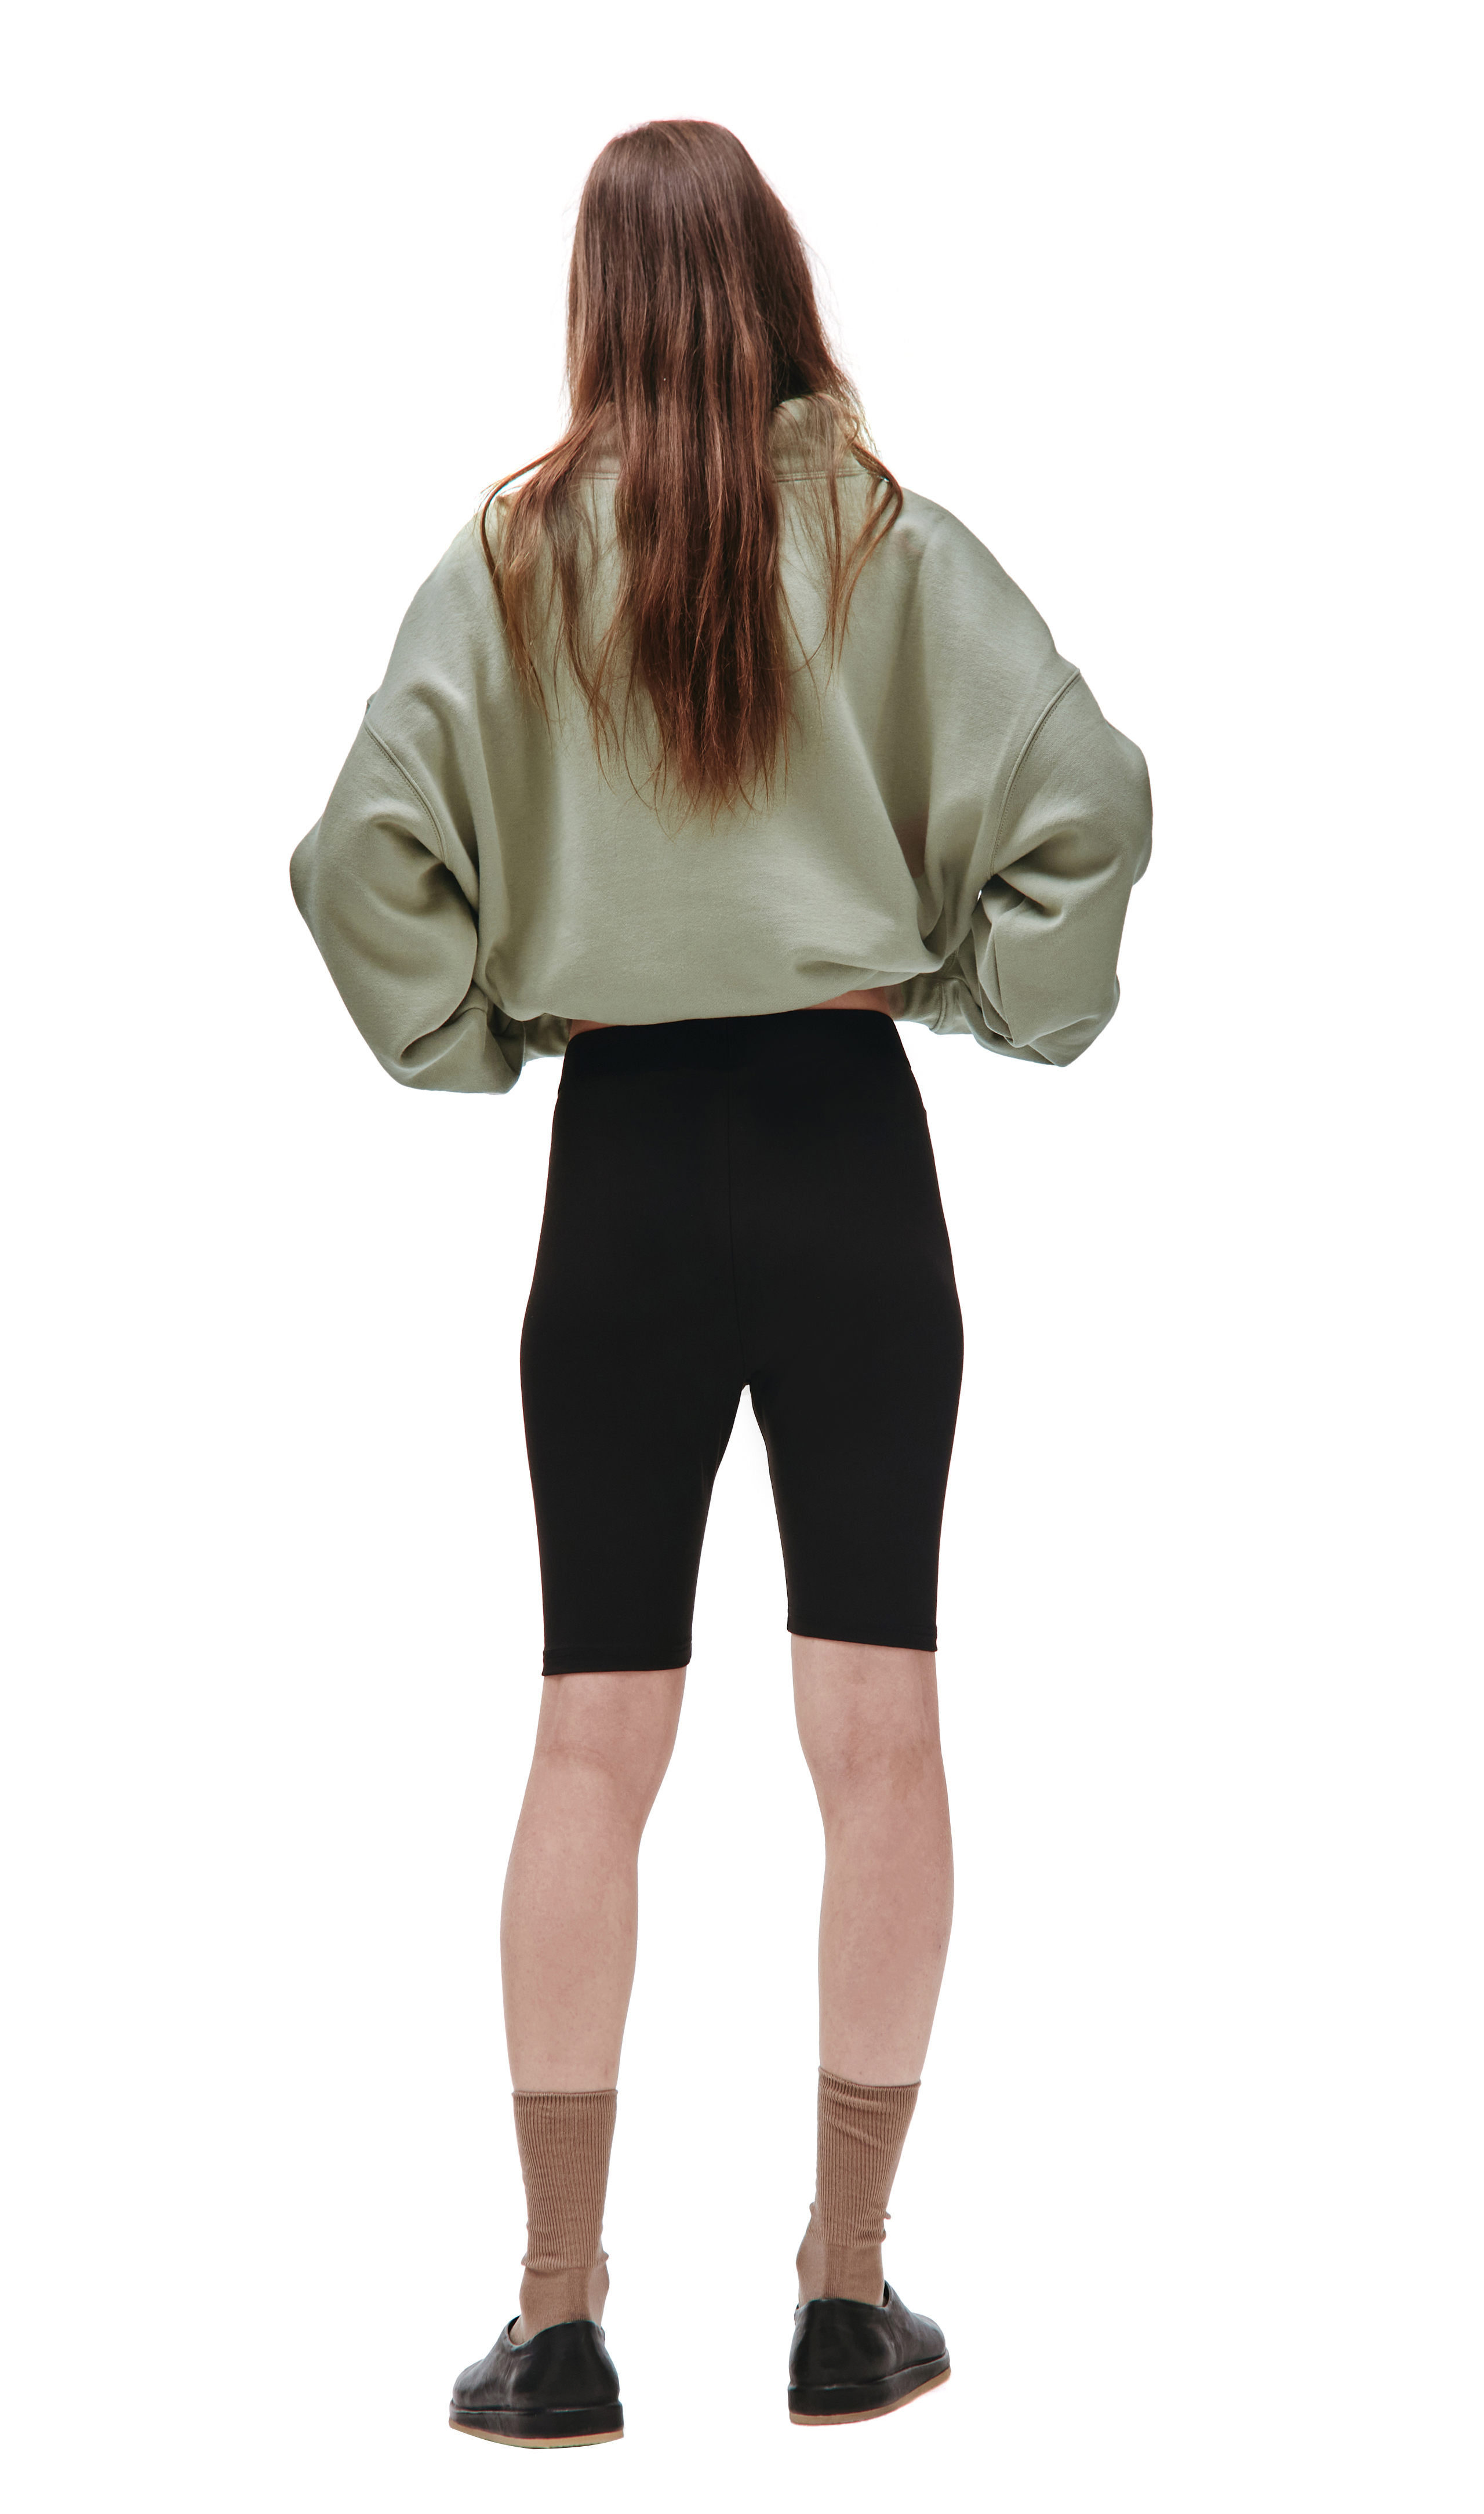 Buy Fear of God Essentials women athletic biker short in black for 